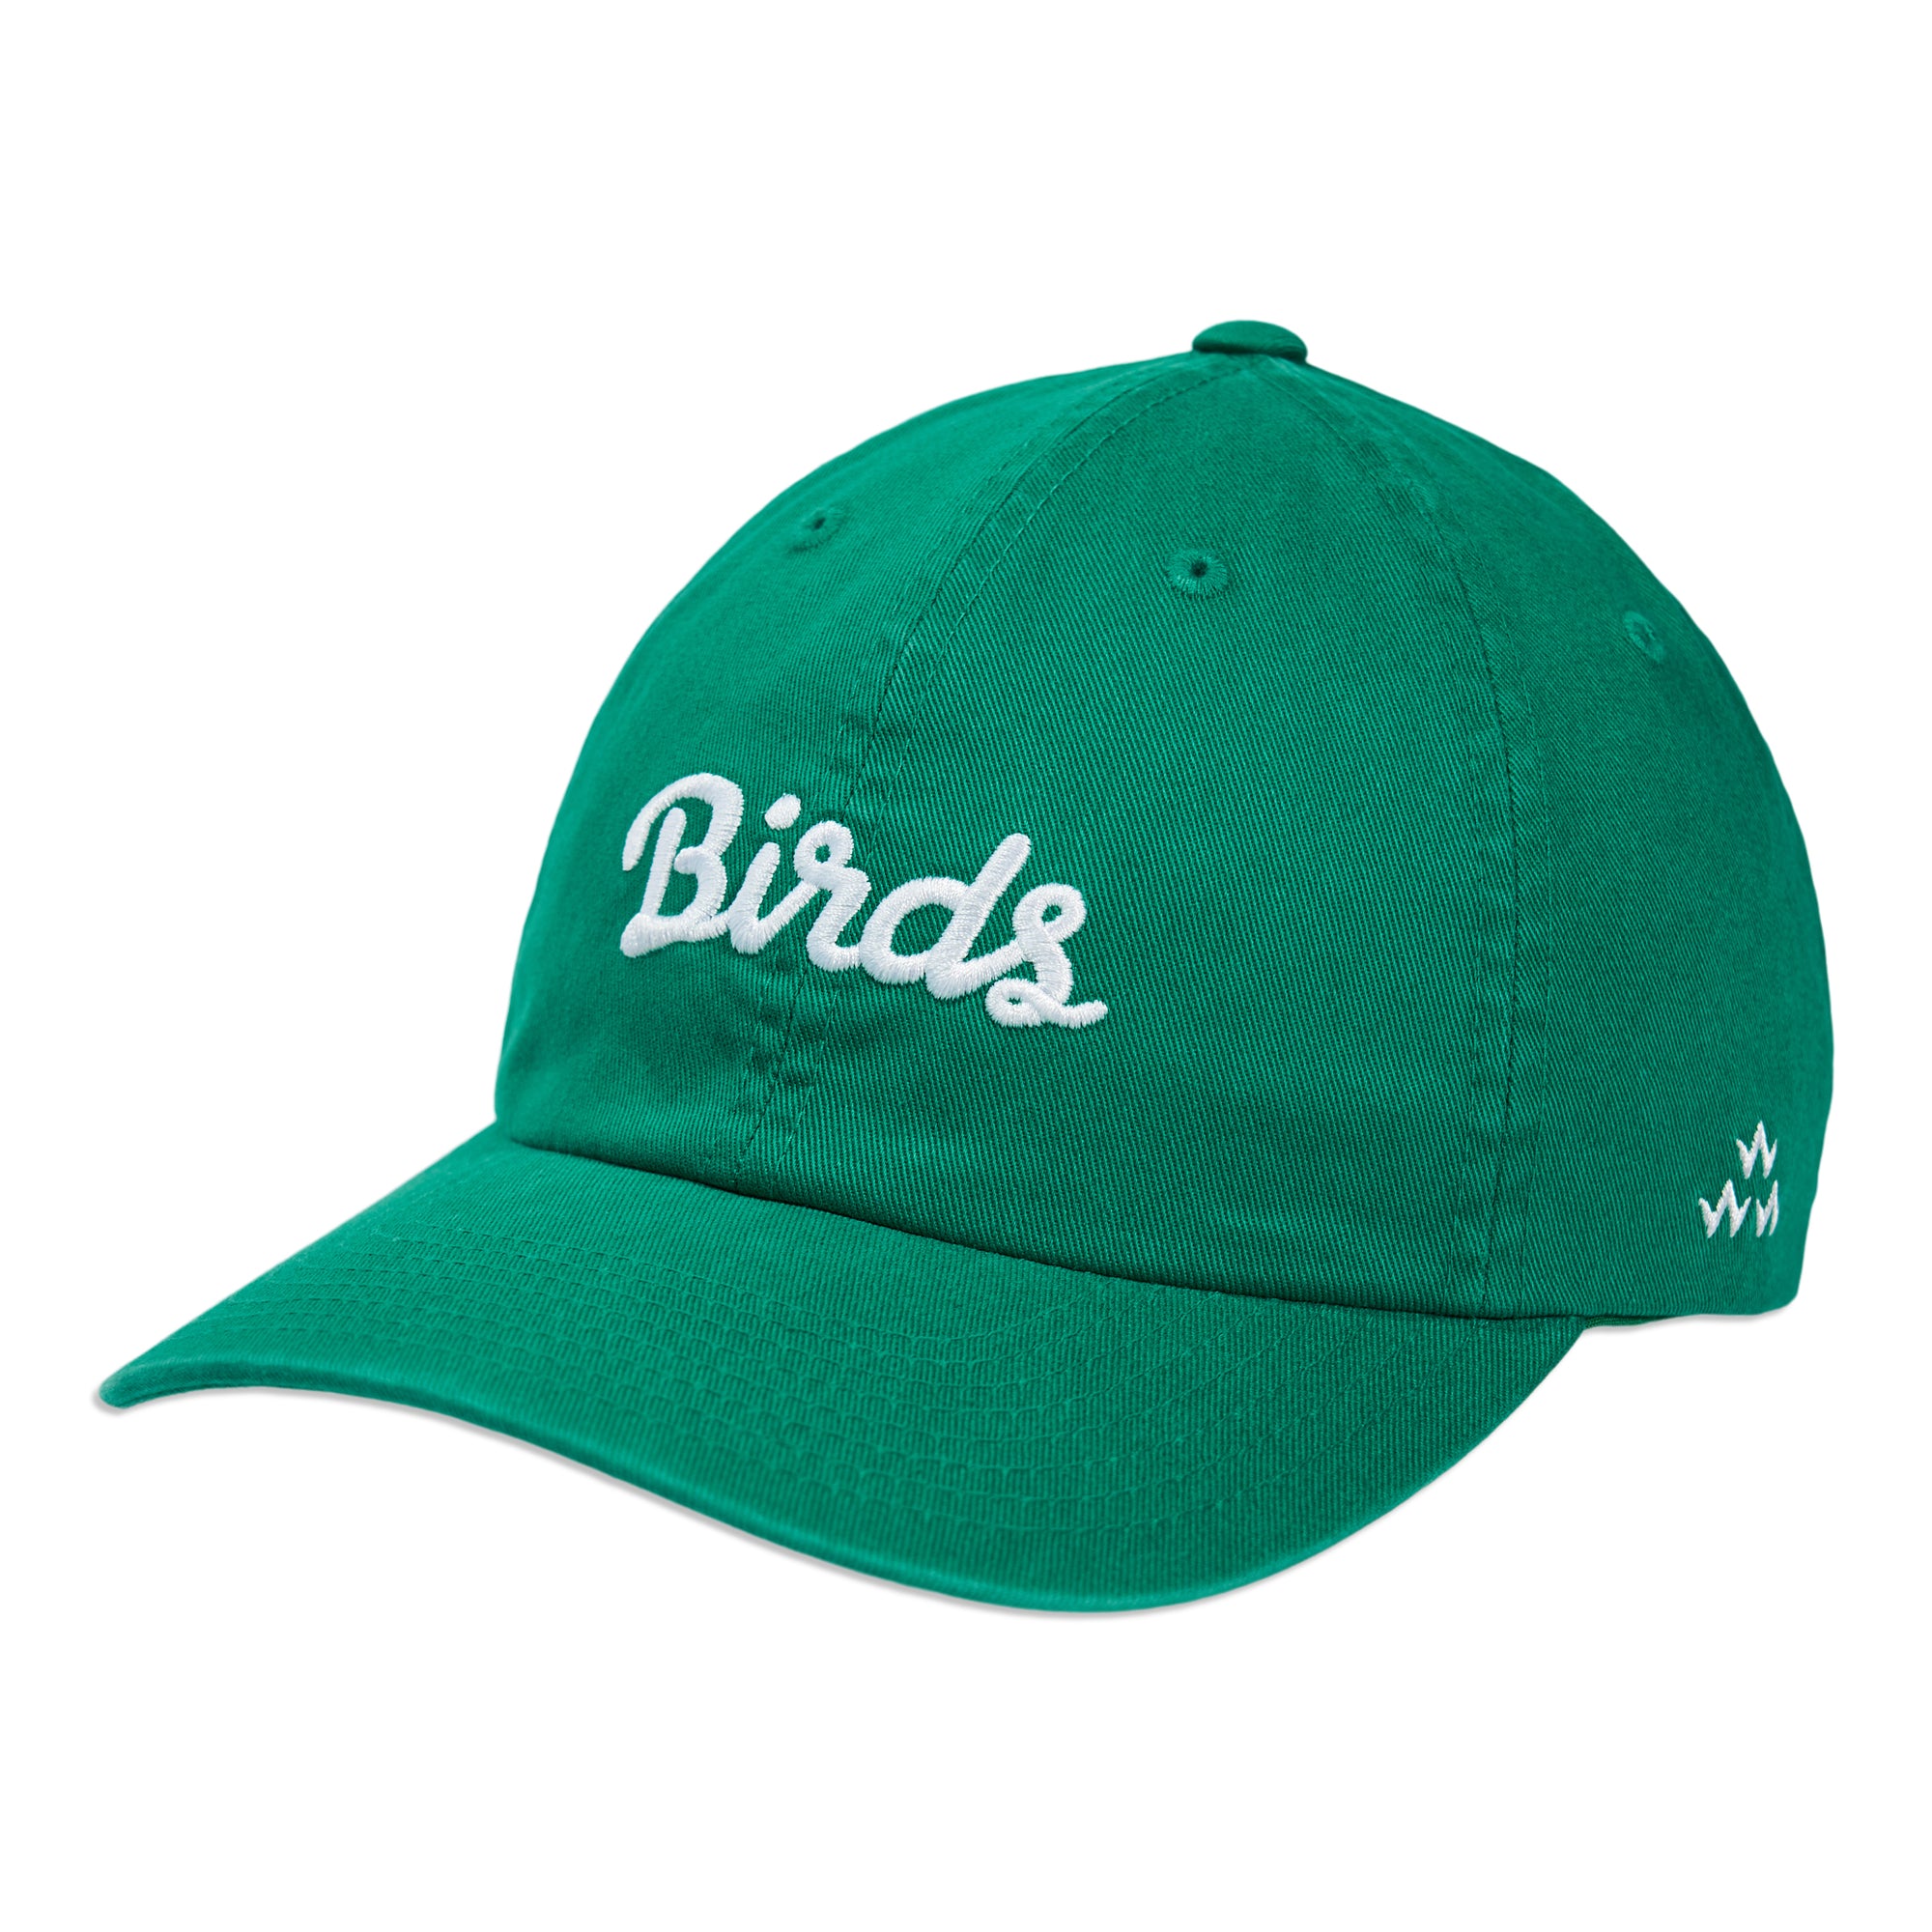 birds-of-condor-green-golf-dad-cap-hat-front